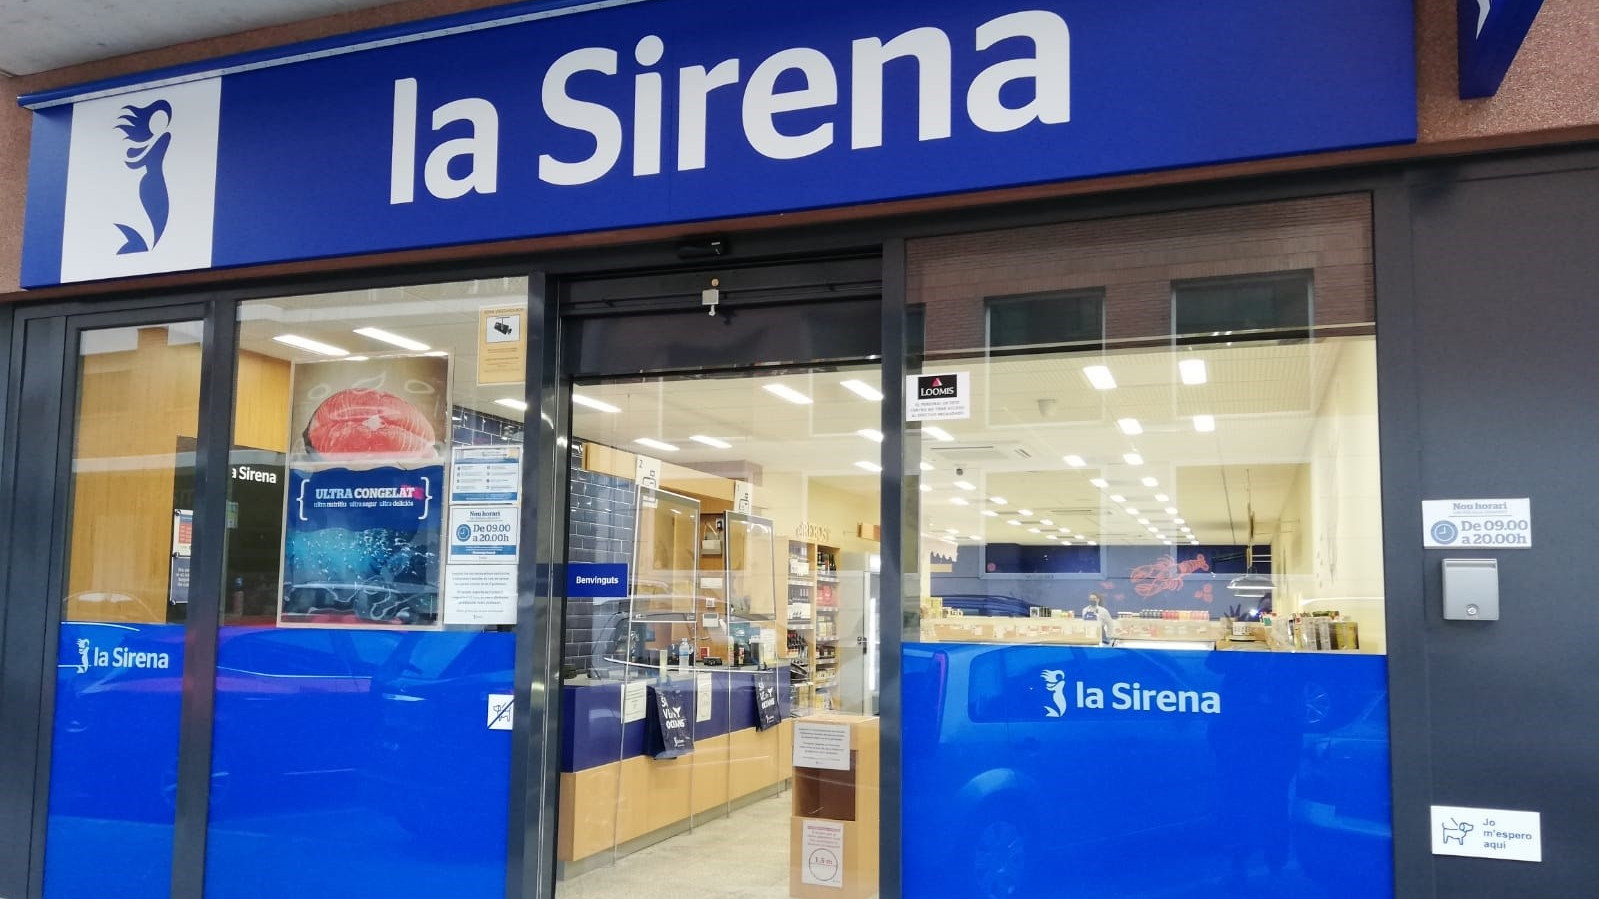 El dueño de Audax Renovables compra La Sirena